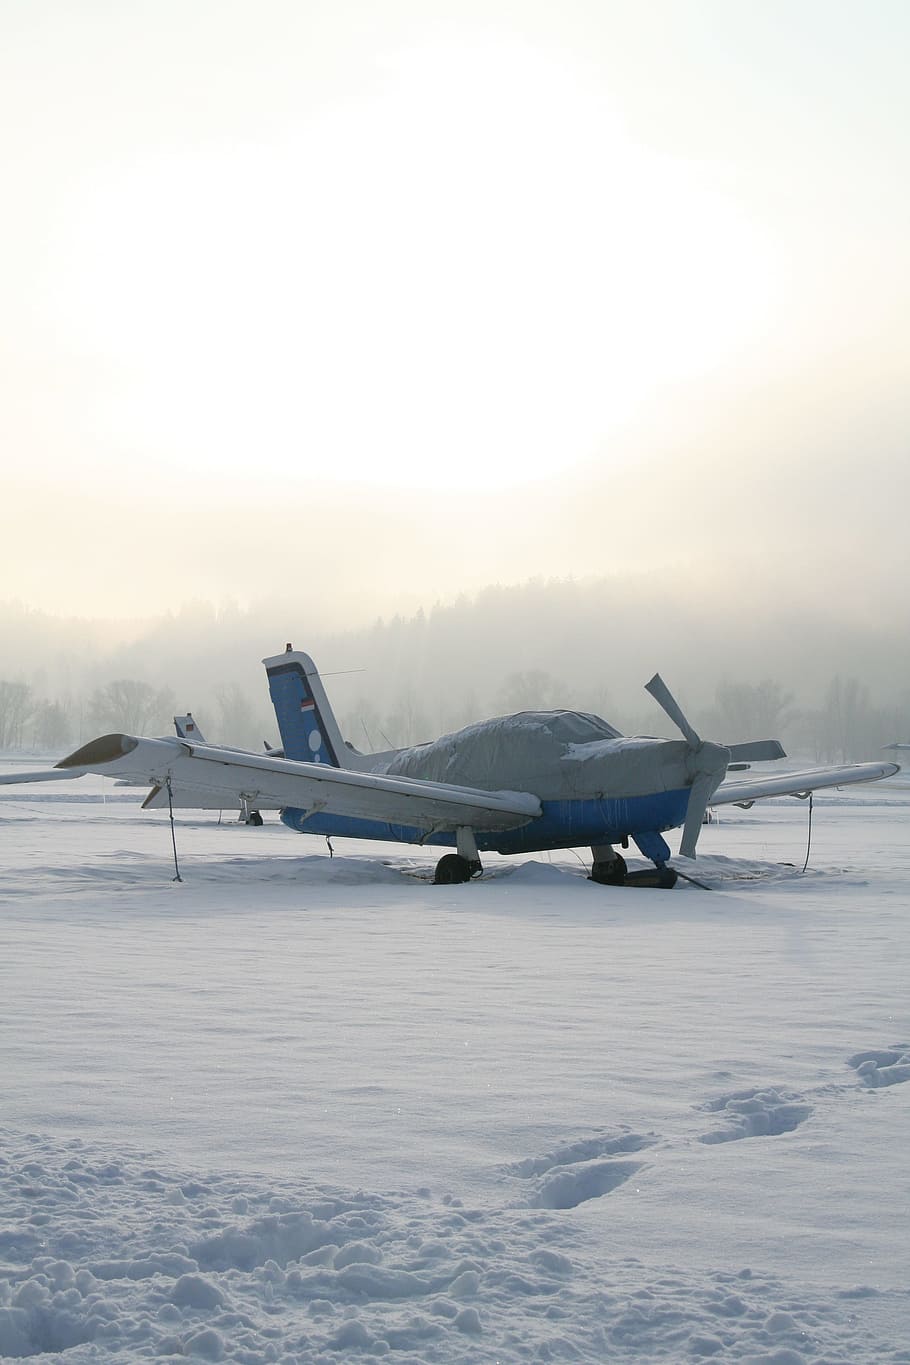 Aircraft, Propeller, Propeller Plane, M17, aircraft, propeller, sport aircraft, winter, light aircraft, airplane, cold temperature